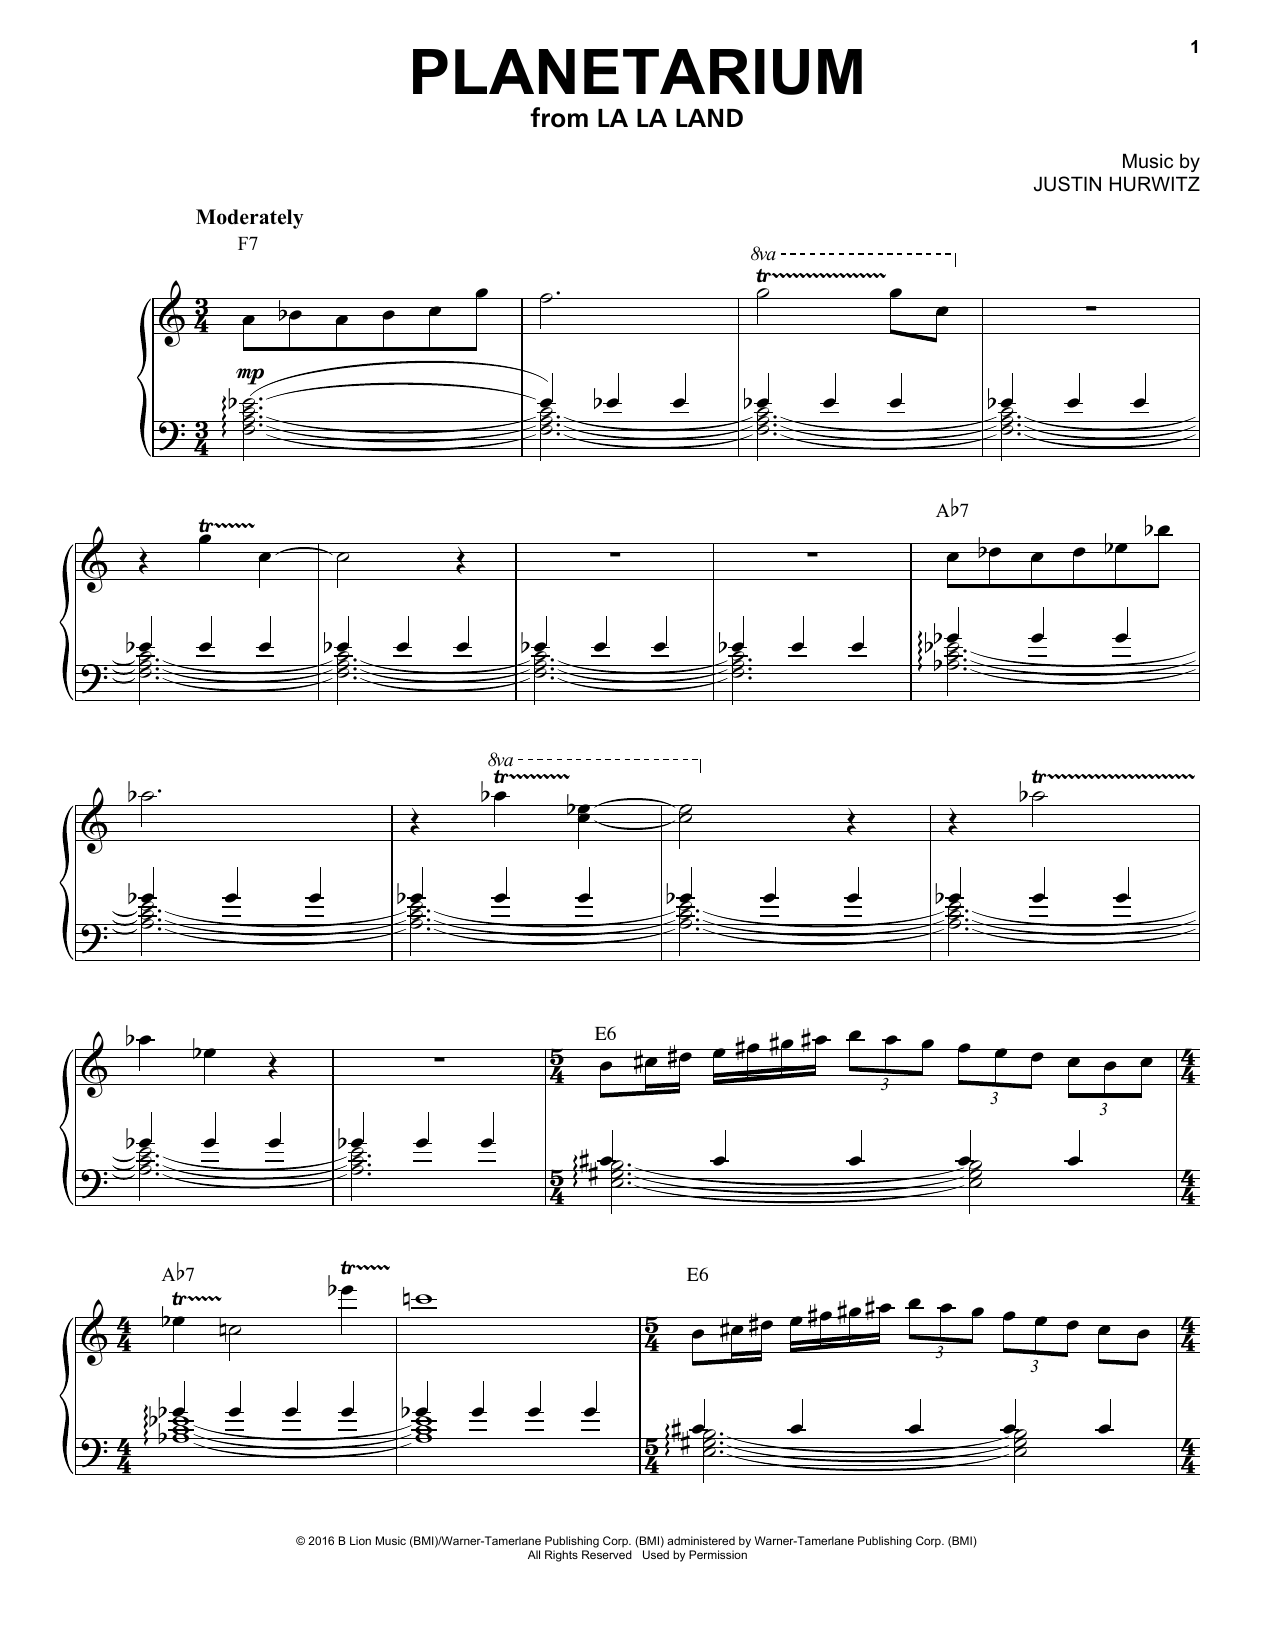 Justin Hurwitz Planetarium Sheet Music Notes & Chords for Piano Duet - Download or Print PDF